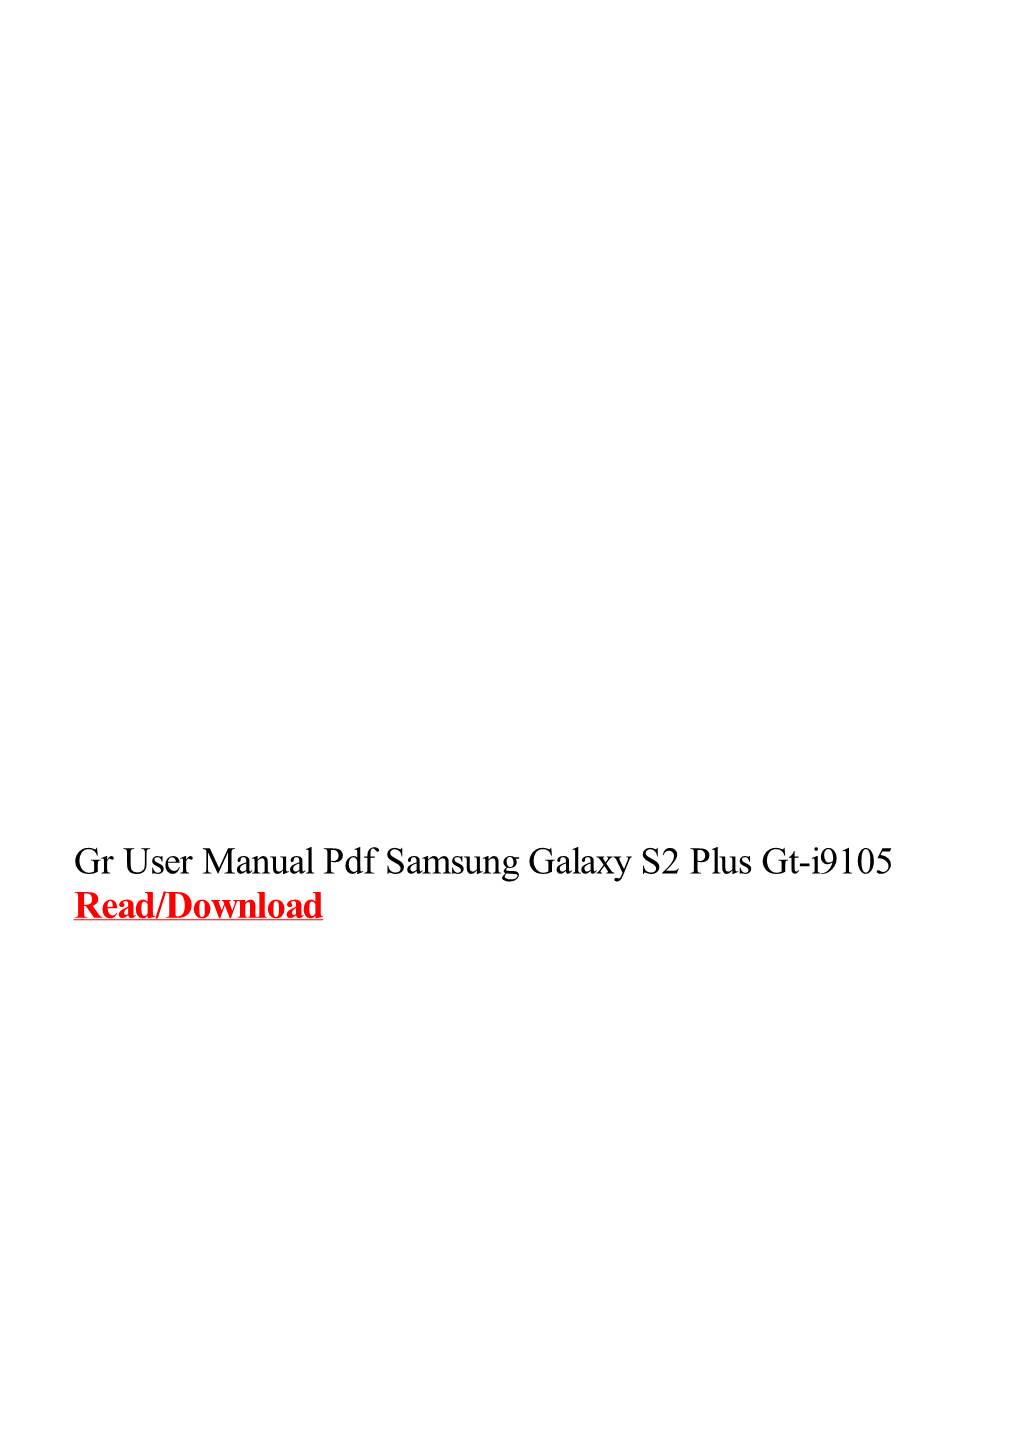 Gr User Manual Pdf Samsung Galaxy S2 Plus Gt-I9105